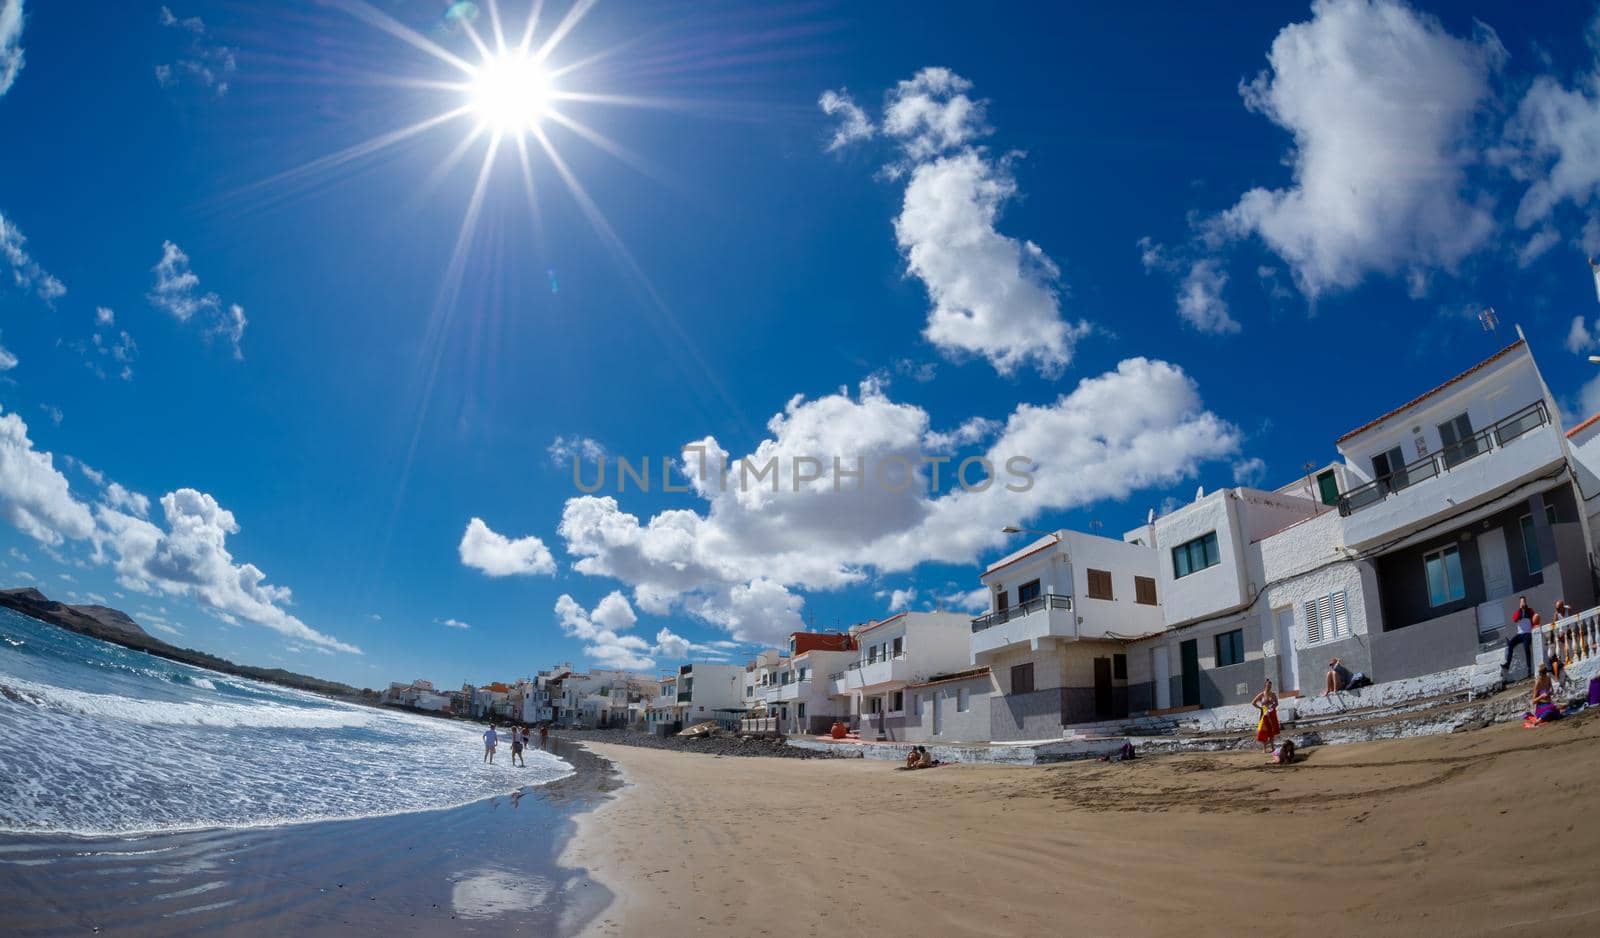 7 February 2022 Playa Ojos de Garza Canary Spain by mugurphoto